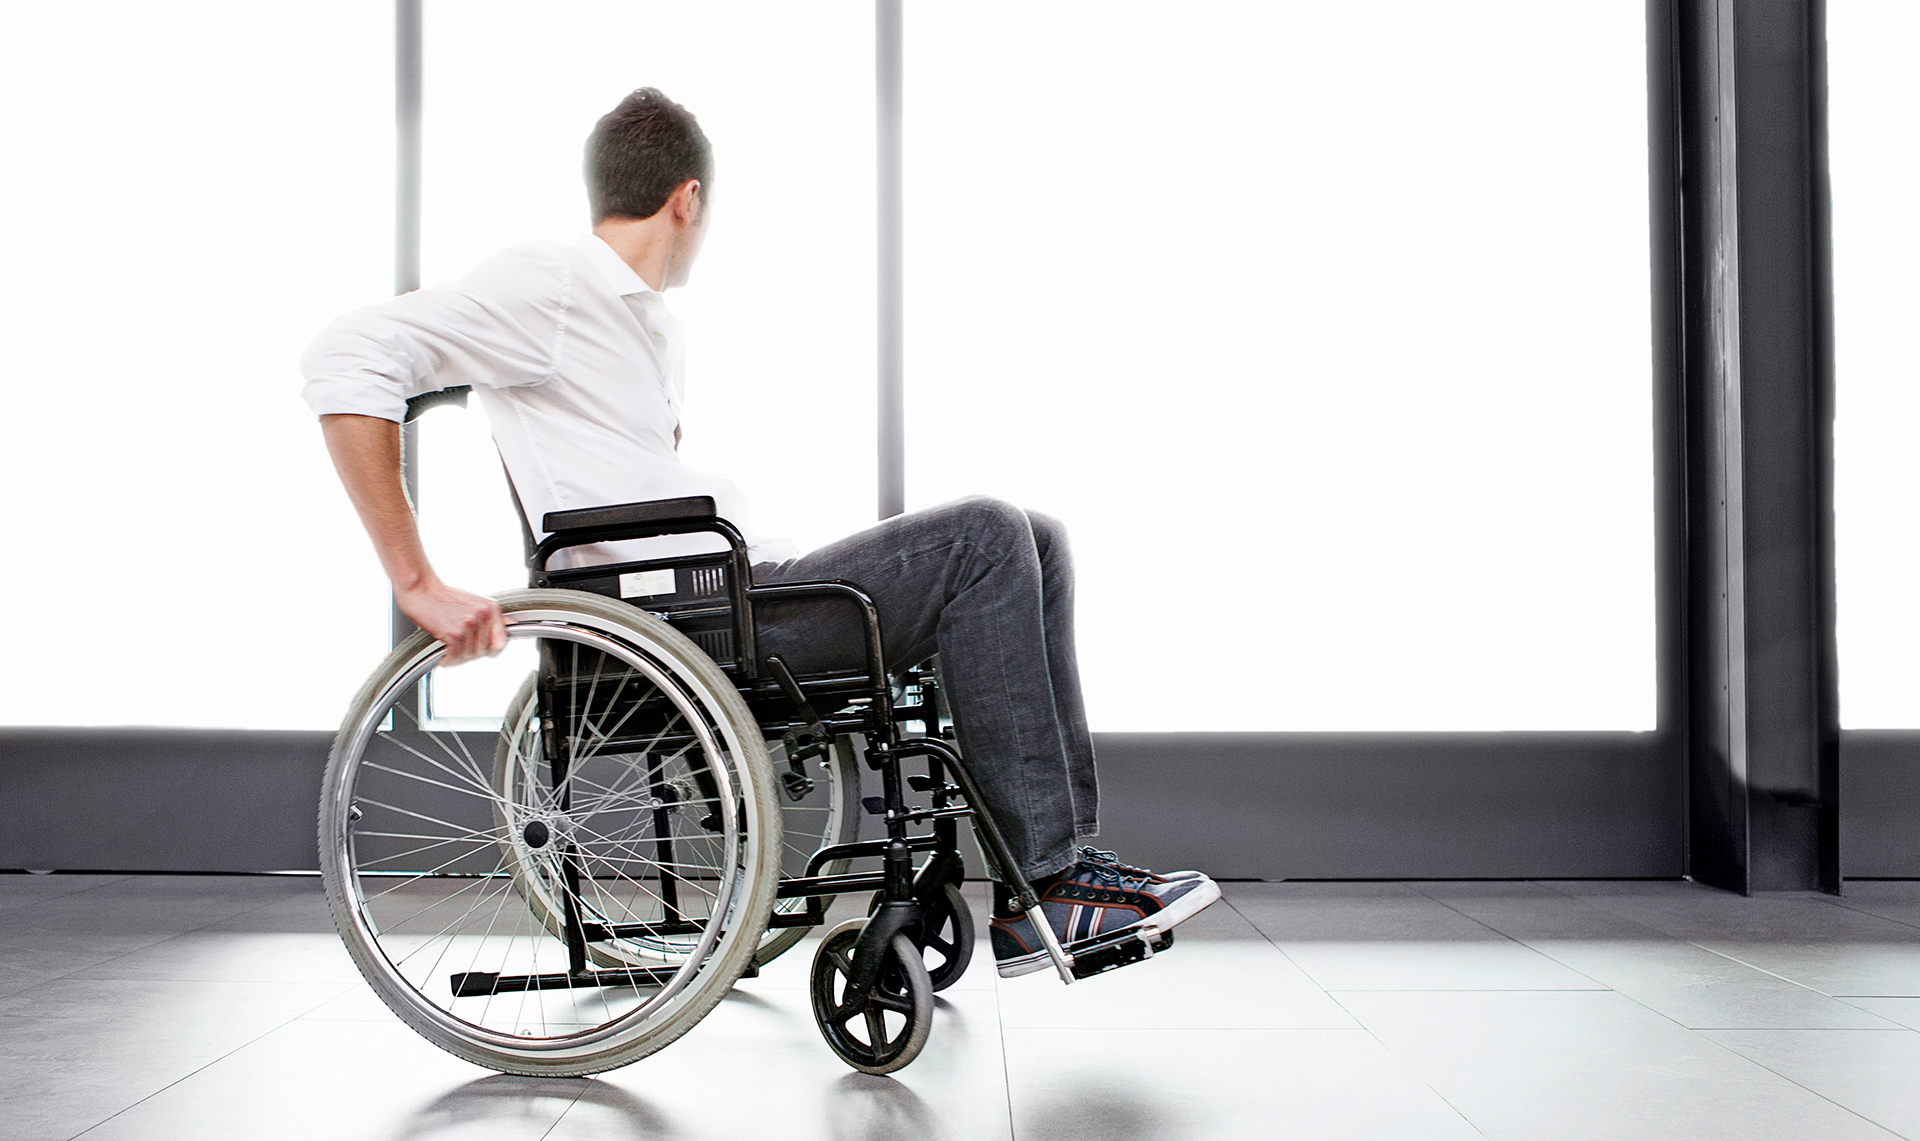 Инвалида отпустили. Инвалидная коляска Barry a8t. Инвалидная коляска «ИК-1м. Человек в инвалидной коляске. Челик в инвальдной коляске.